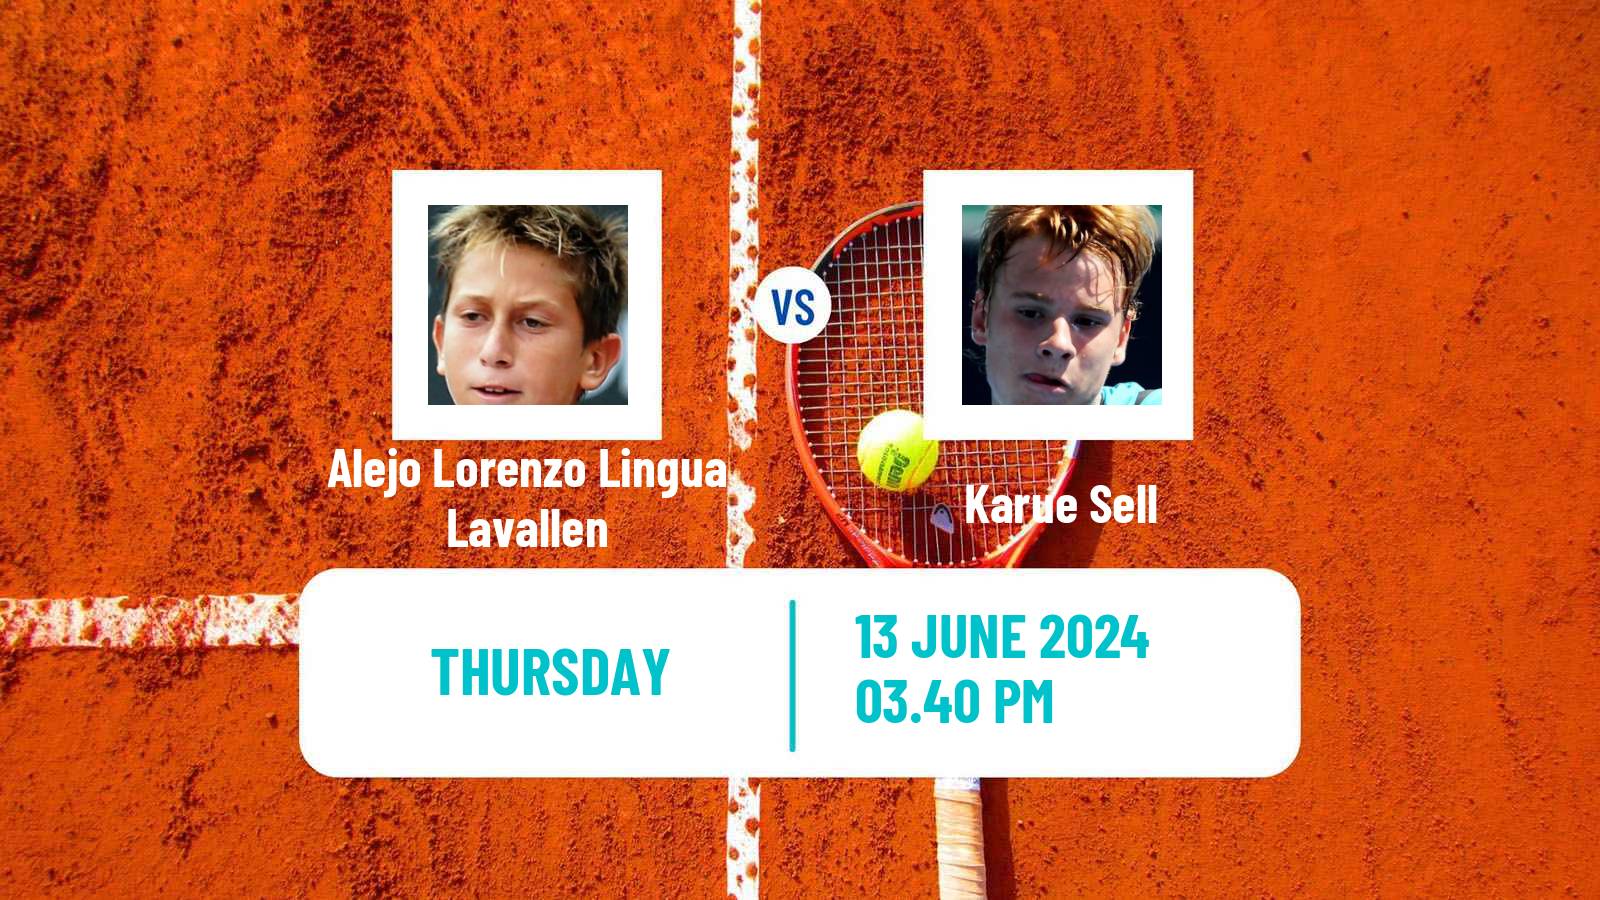 Tennis Lima Challenger Men Alejo Lorenzo Lingua Lavallen - Karue Sell